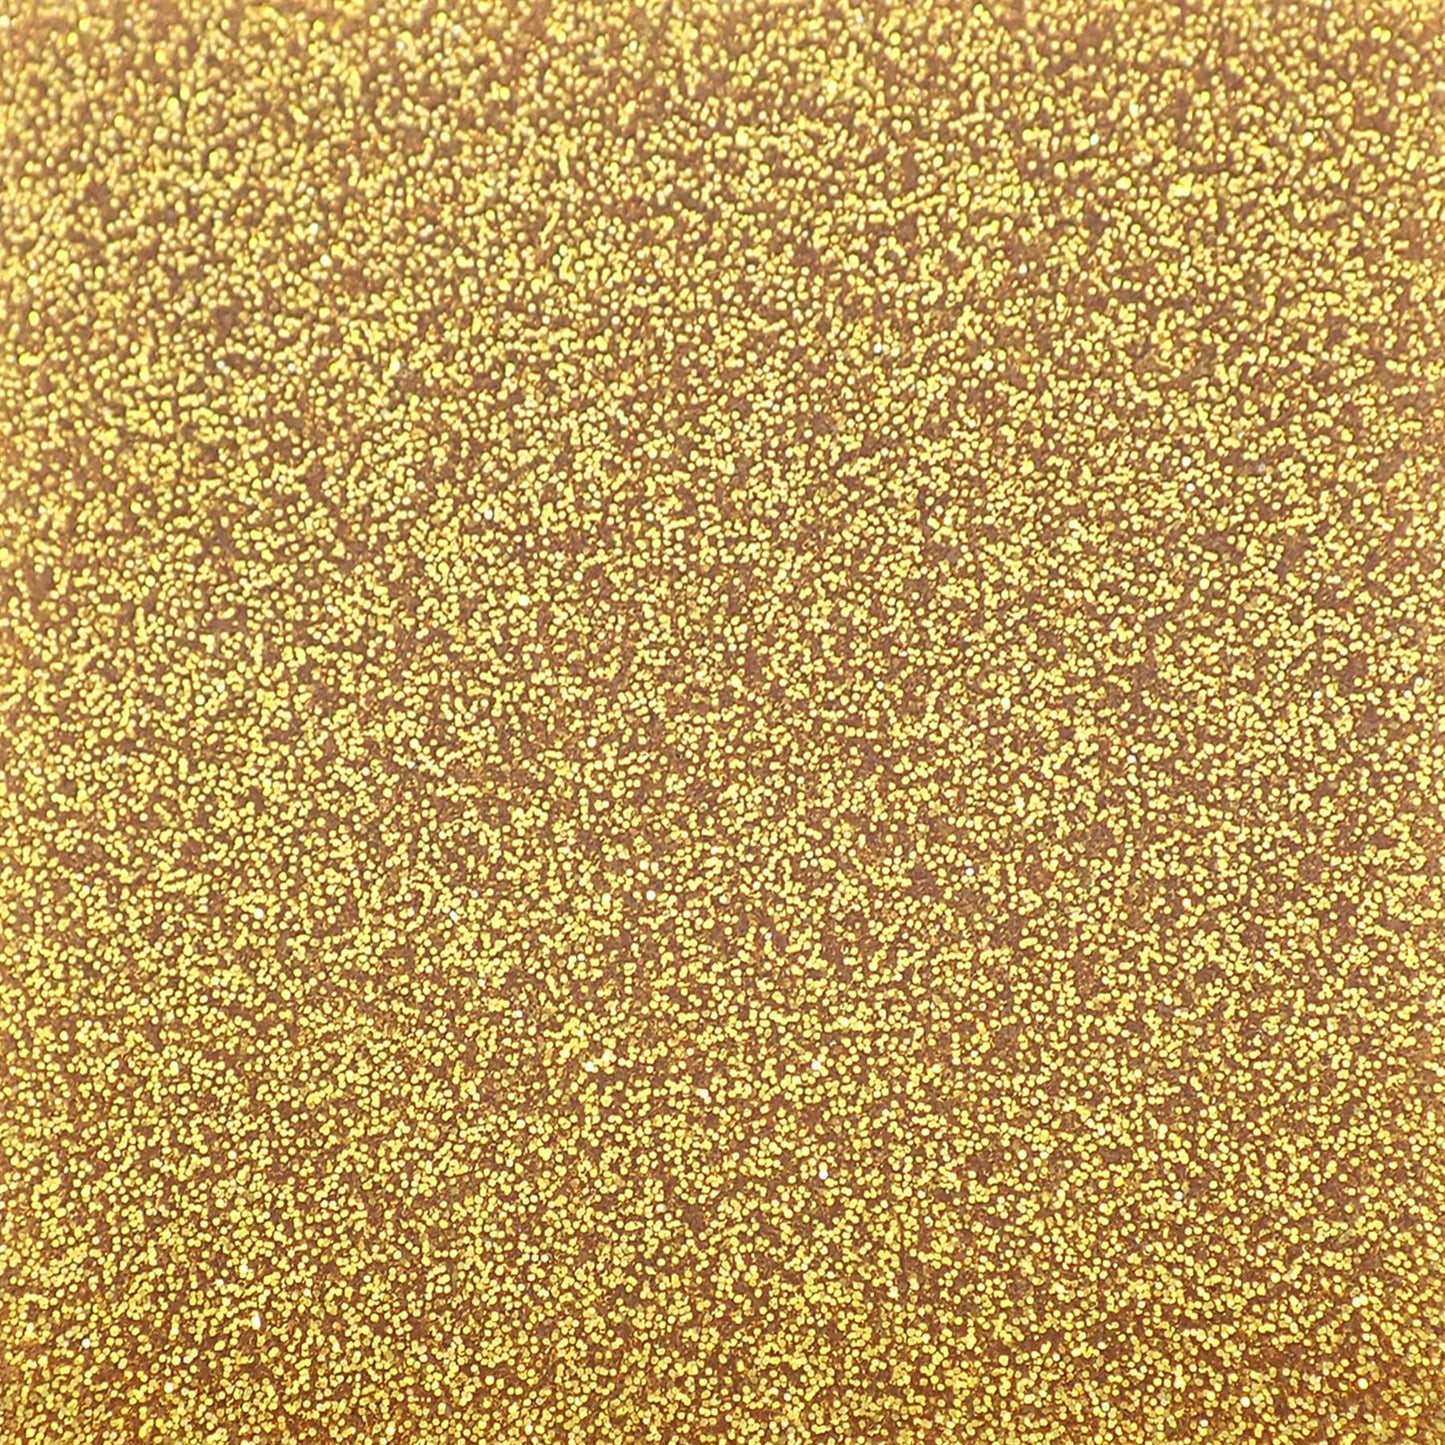 Incudo Aztec Gold 2-Sided Glitter Acrylic Sheet - 300x200x3mm (11.8x7.87x0.12")